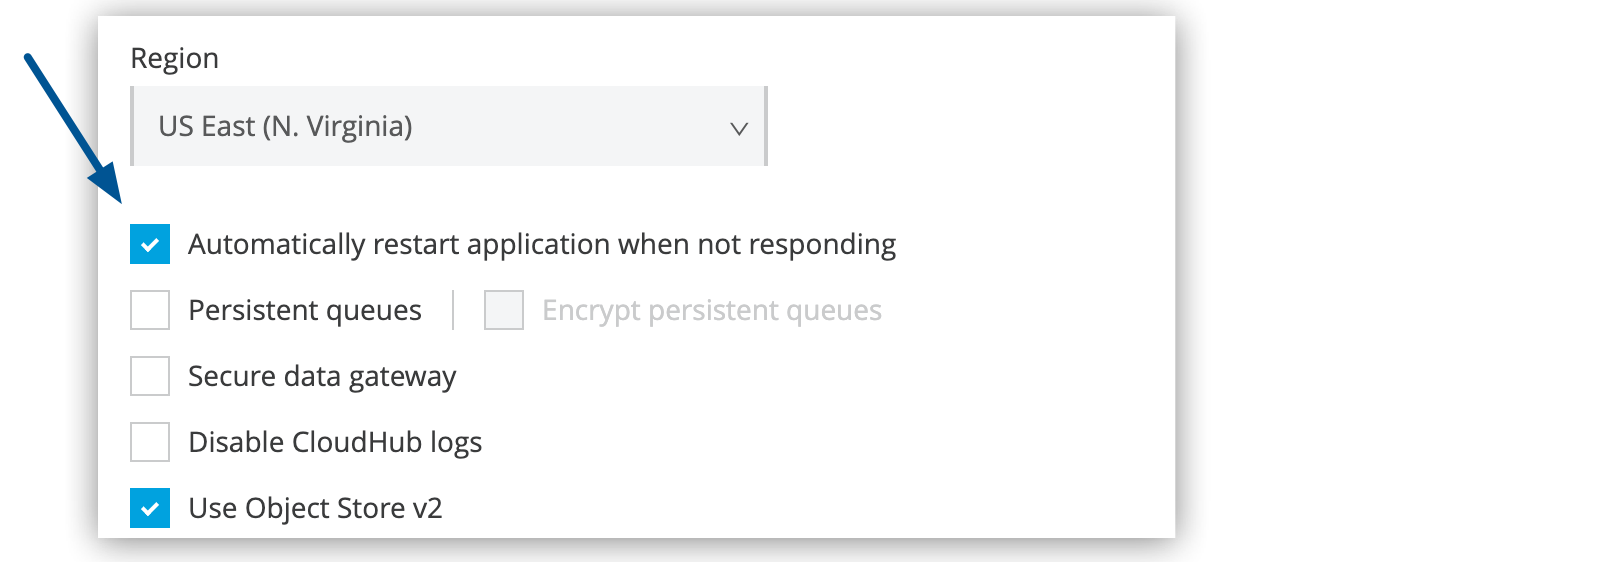 Automatically restart application when not responding option